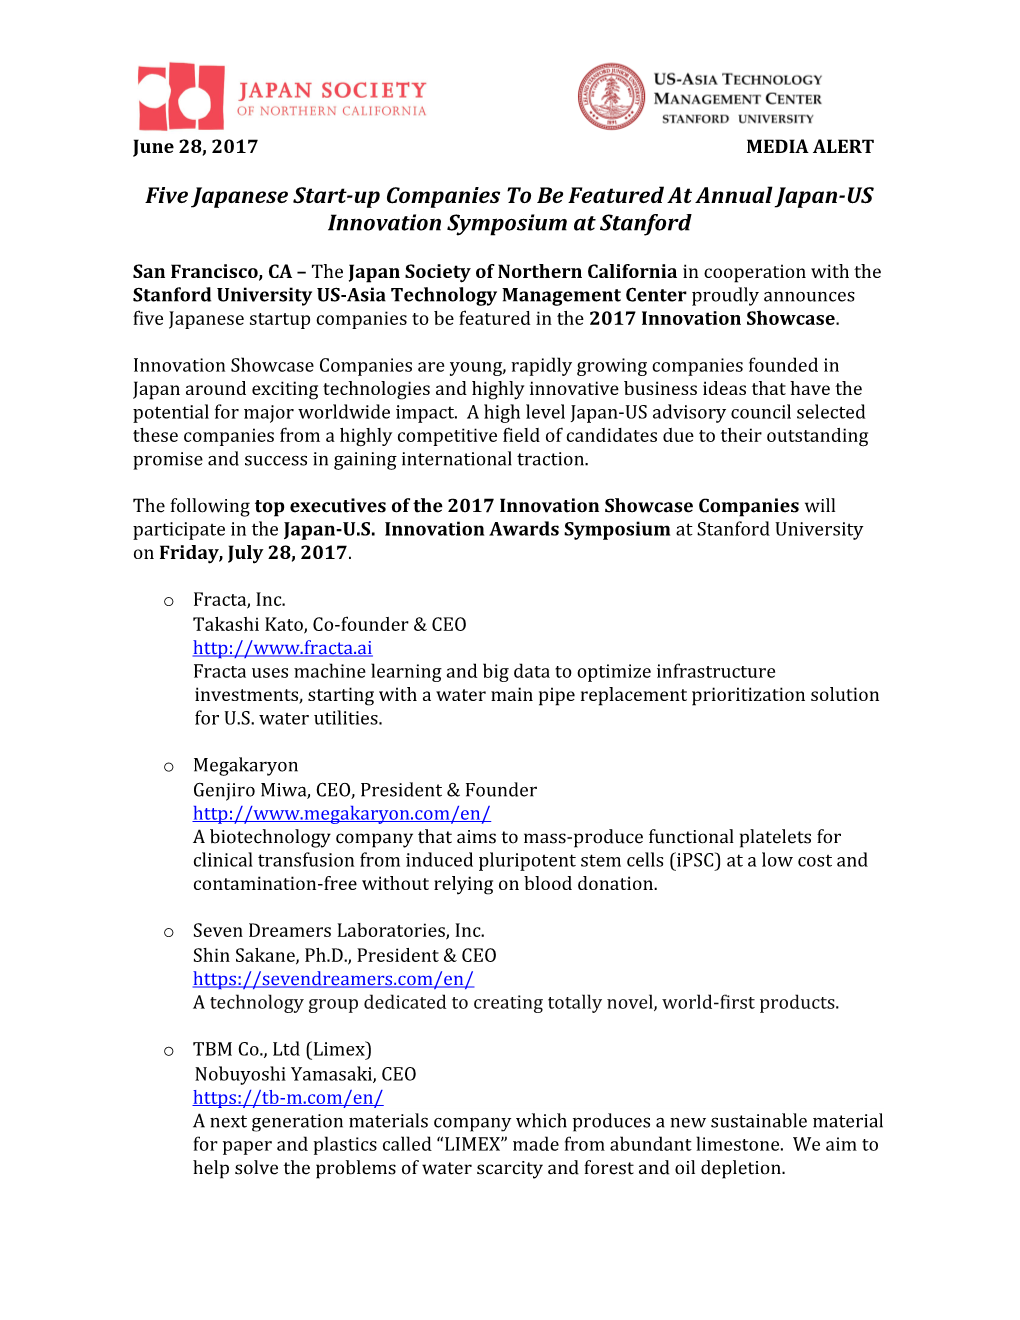 MEDIA ALERT Japan Society Norcal Announces 2014 Innovation Awards Symposium